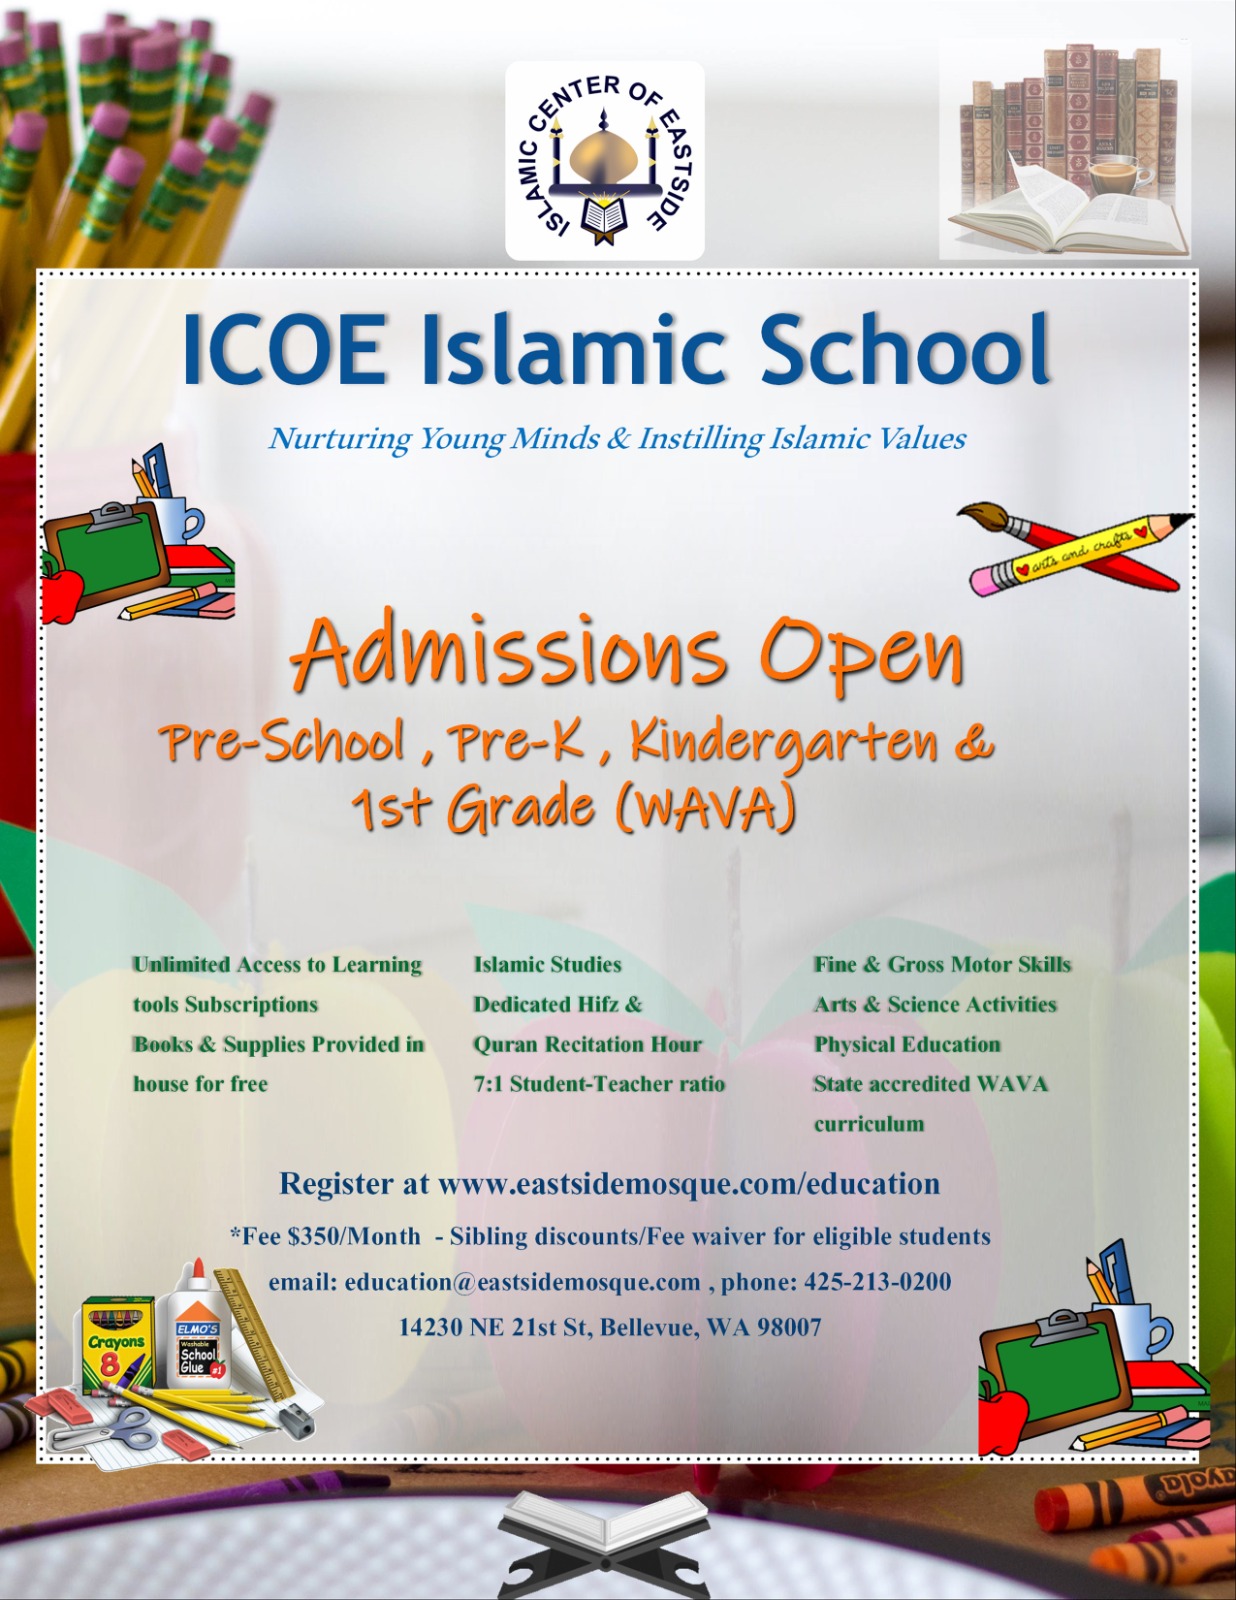 ICOE Islamic School